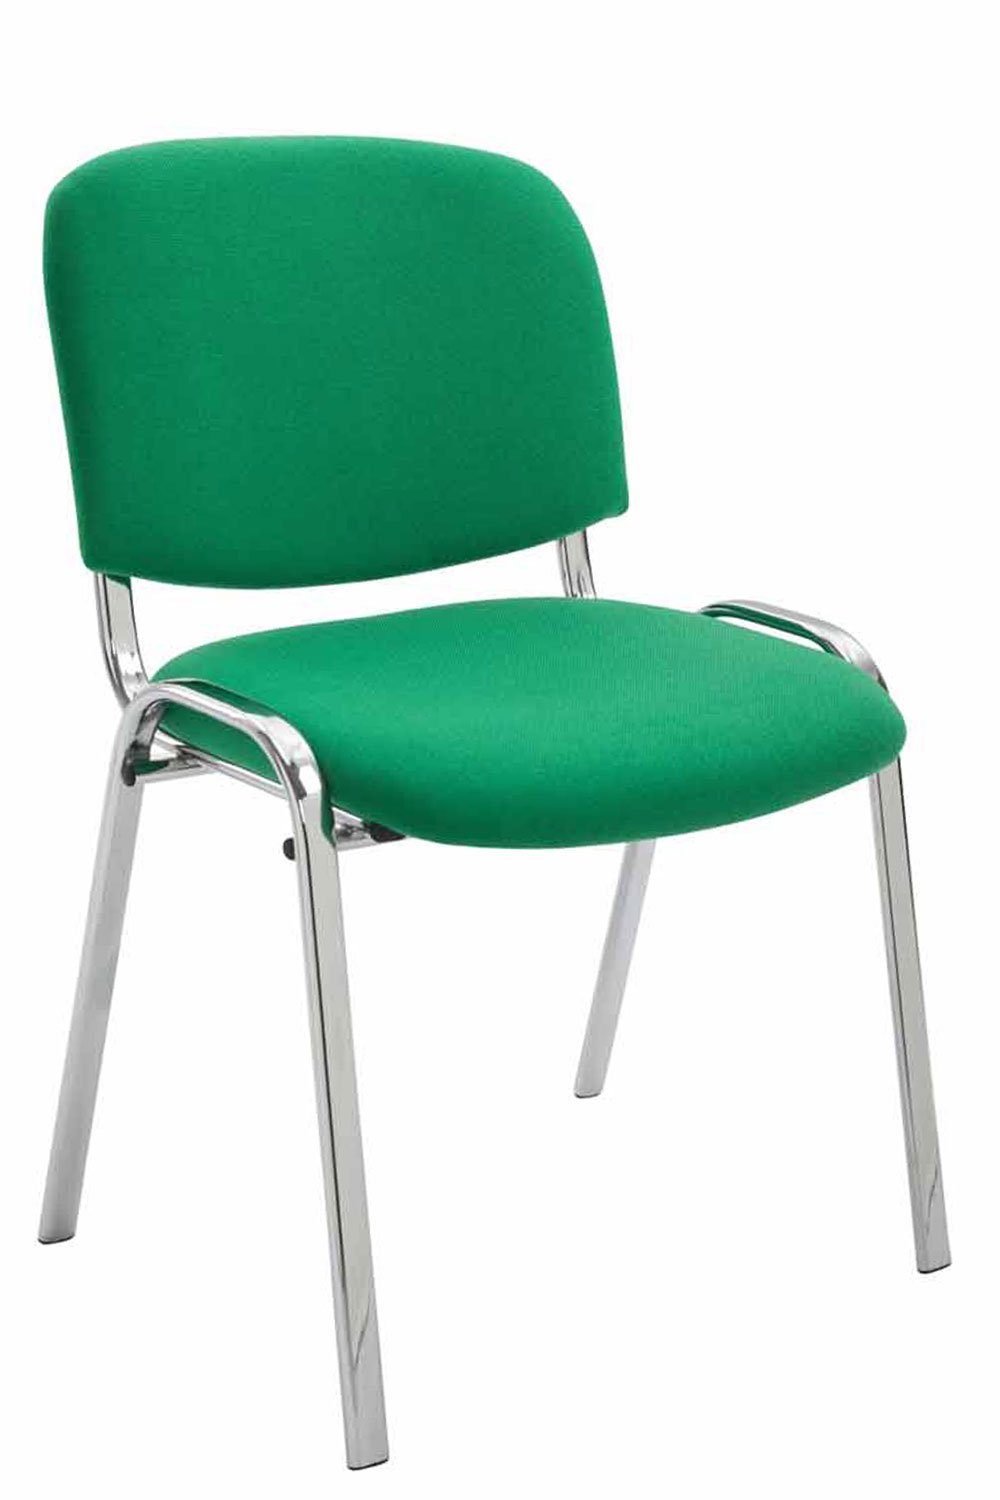 Warteraumstuhl hochwertiger Stoff Besucherstuhl - grün TPFLiving (Besprechungsstuhl - Konferenzstuhl Sitzfläche: Keen Polsterung Metall Gestell: mit Messestuhl), chrom - -